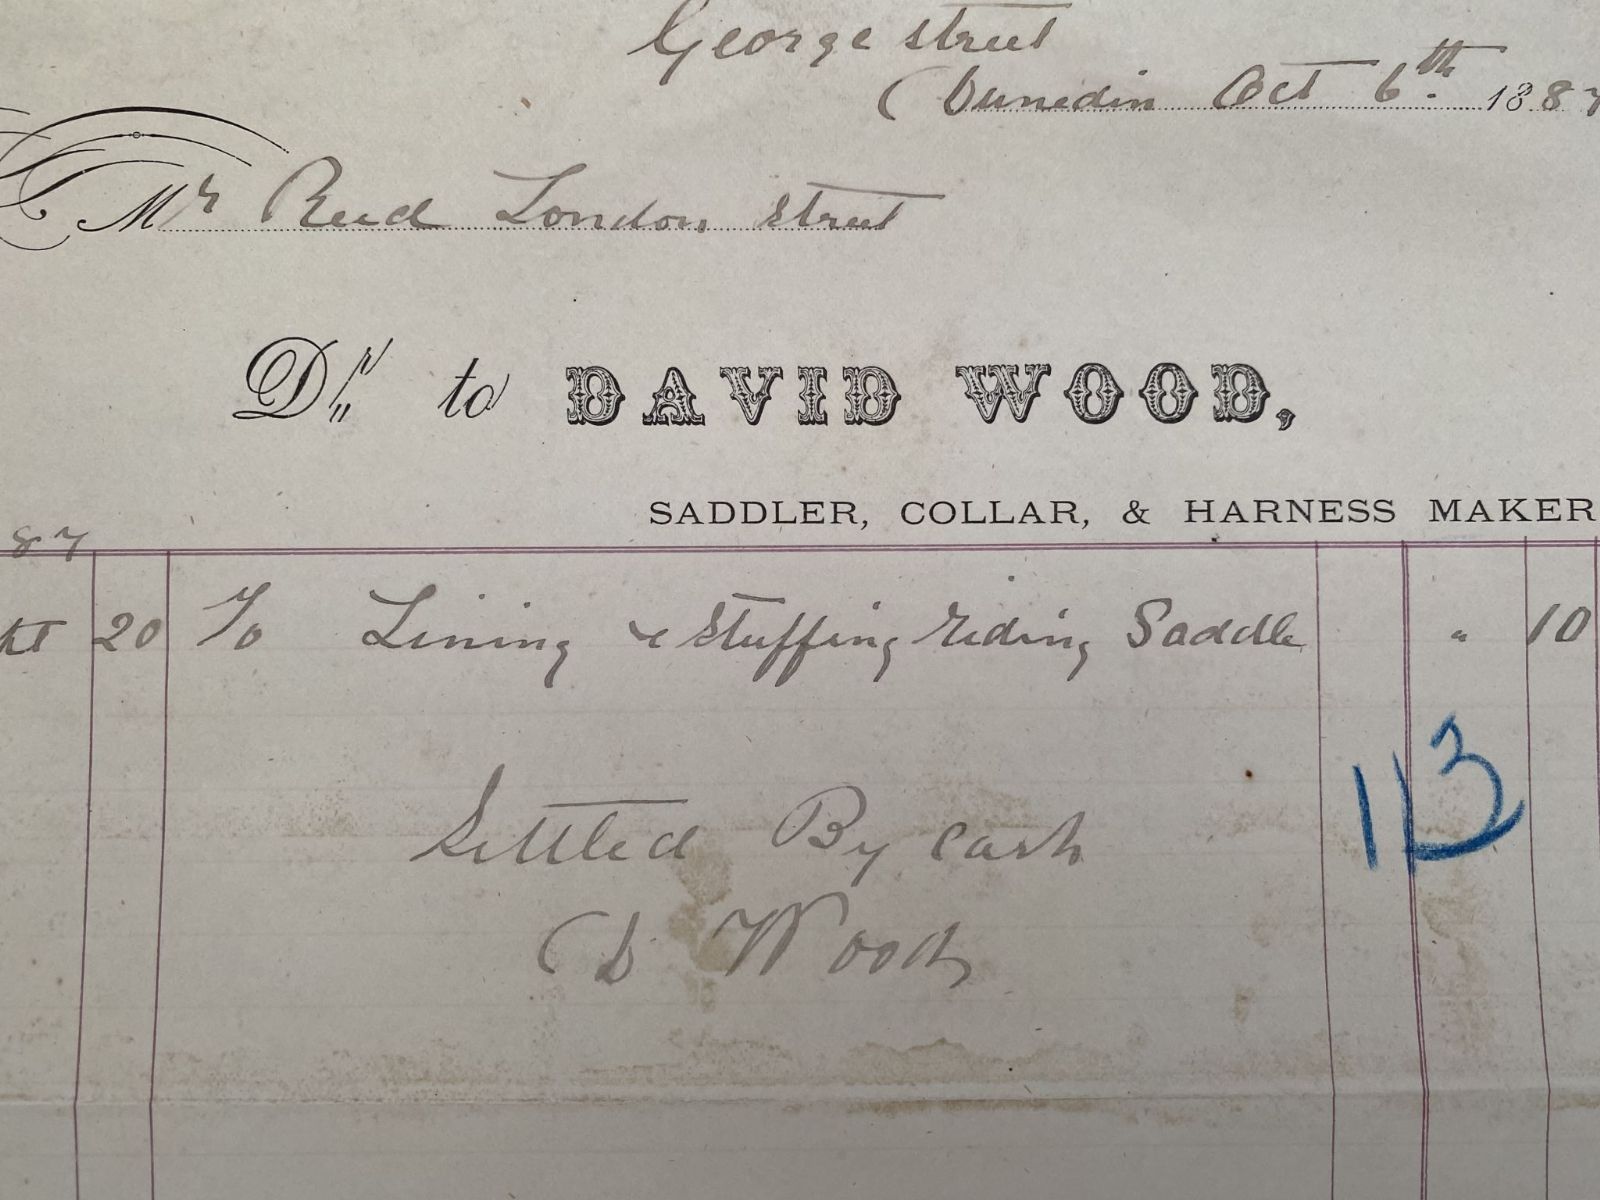 ANTIQUE INVOICE / RECEIPT: David Wood, Dunedin 1887